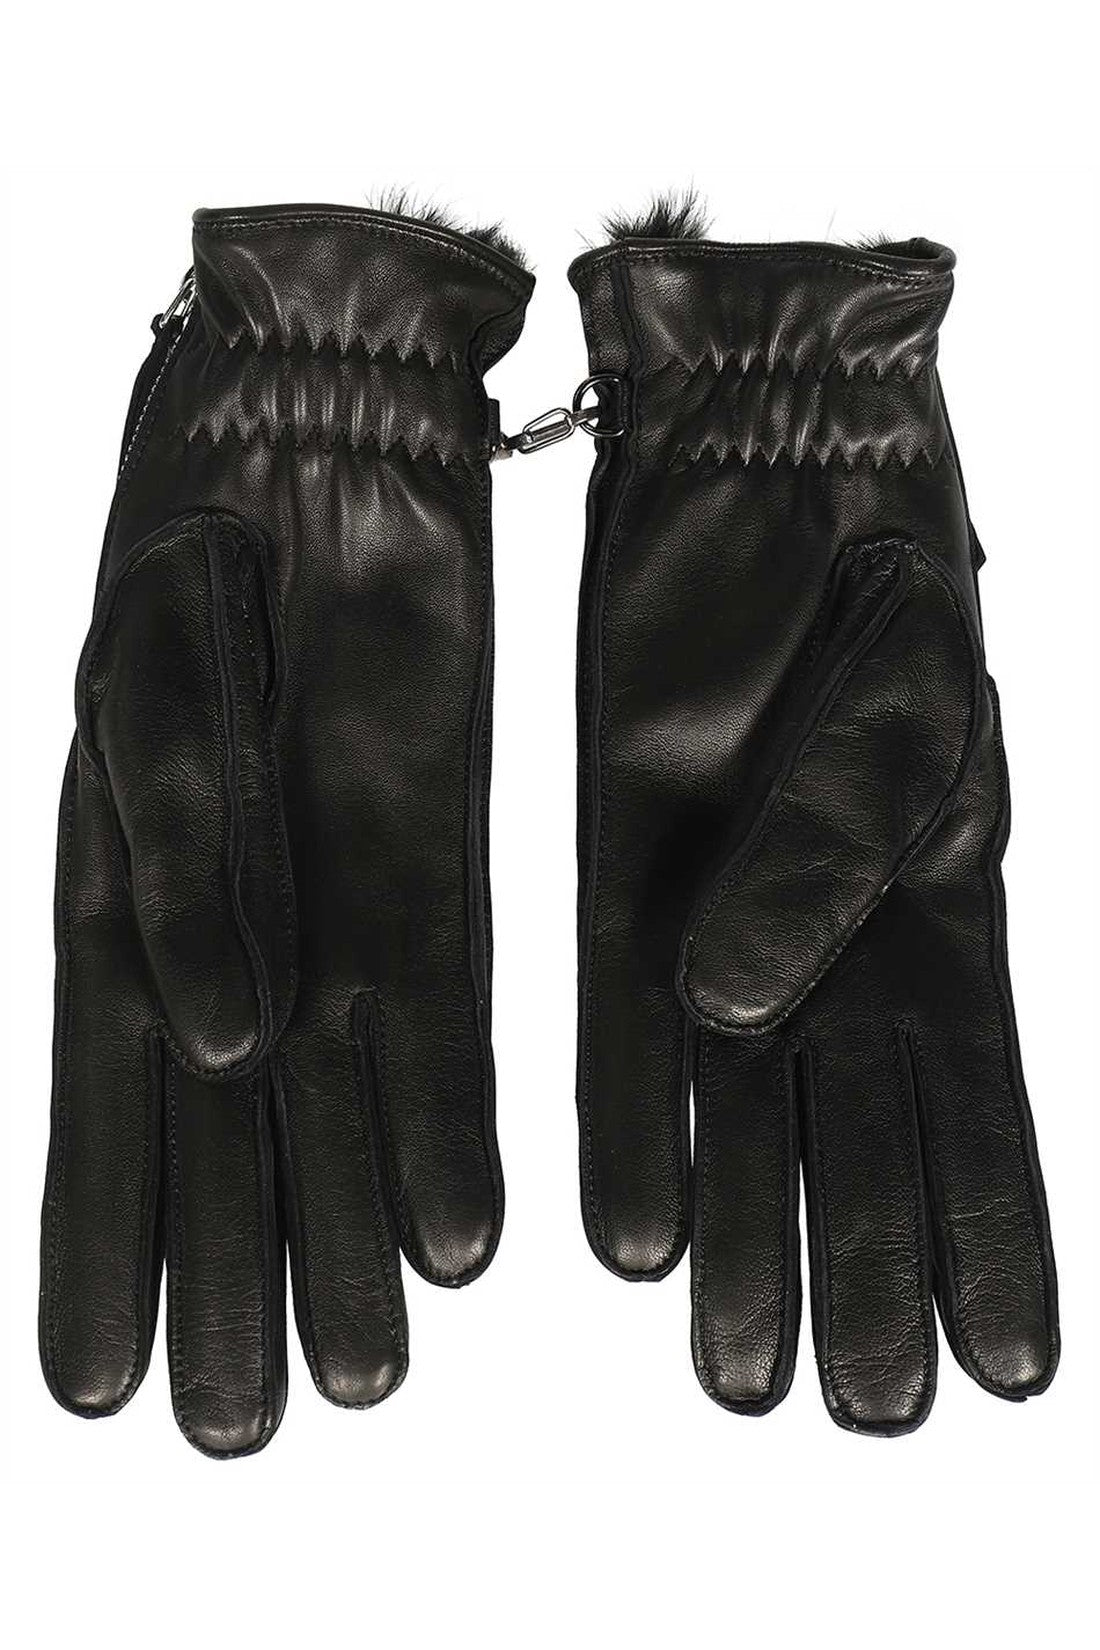 Dsquared2-OUTLET-SALE-Leather gloves-ARCHIVIST